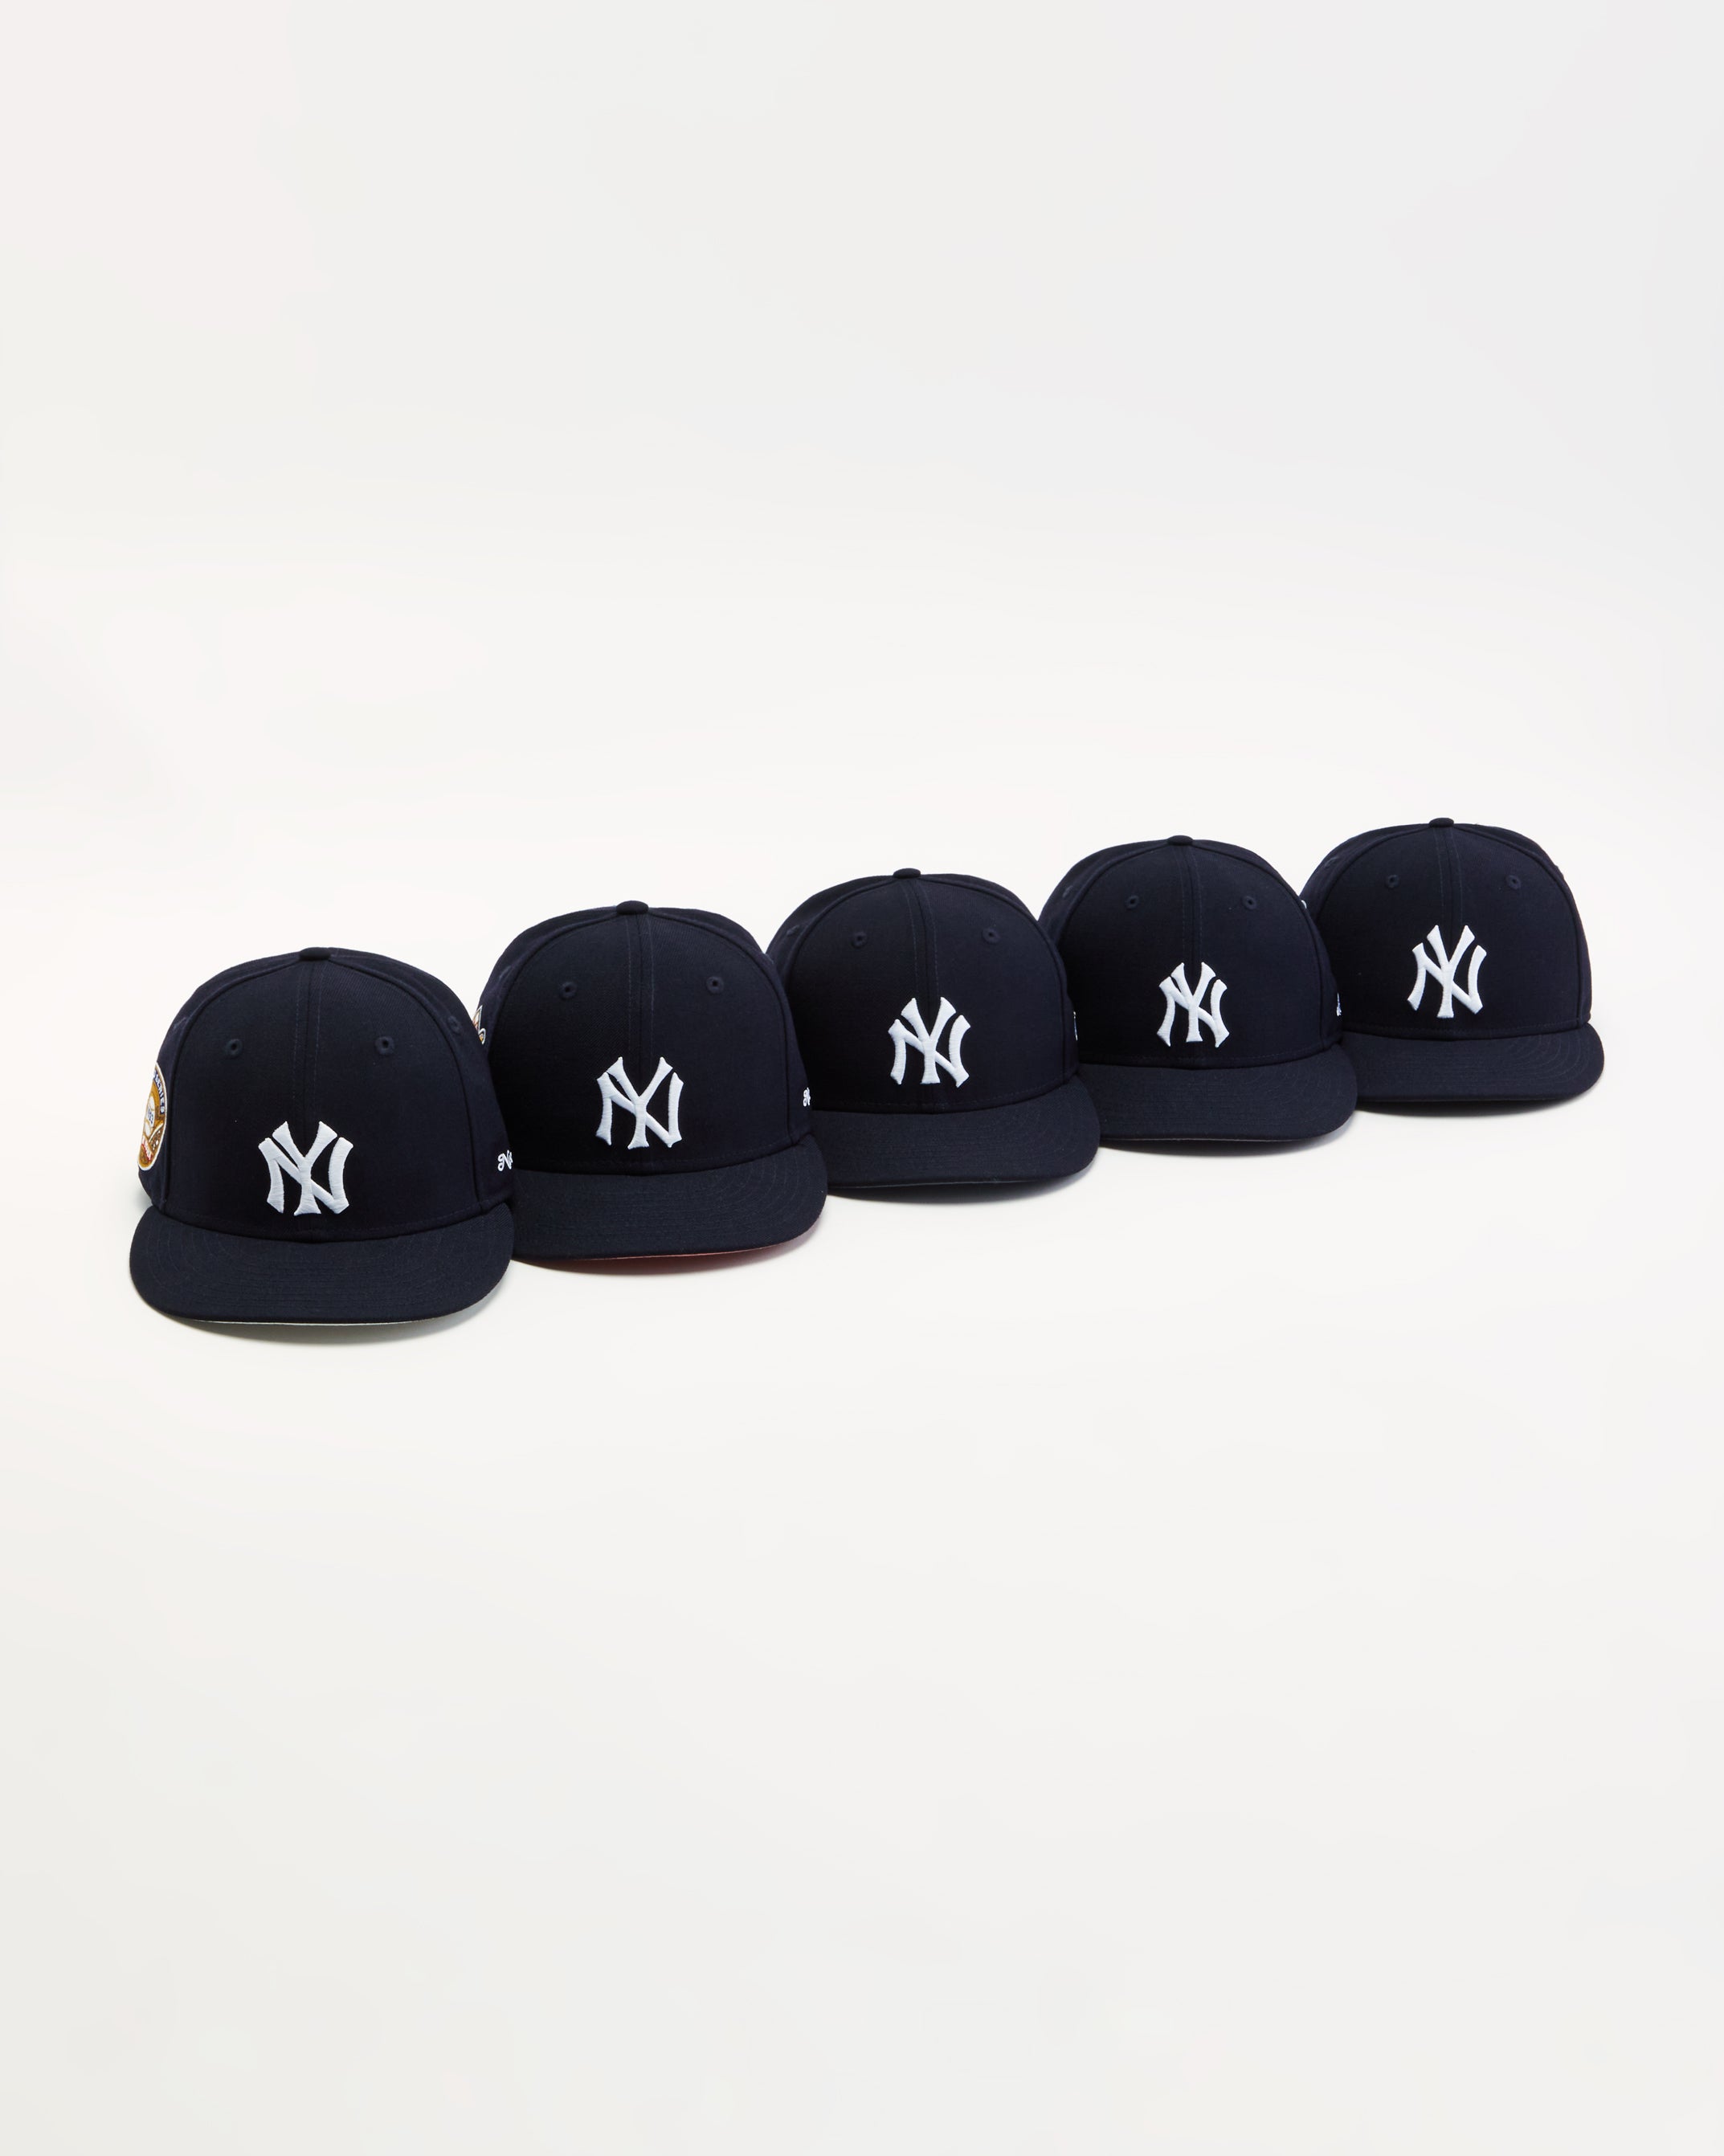 Kith & New Era for New York Yankees - The Palette